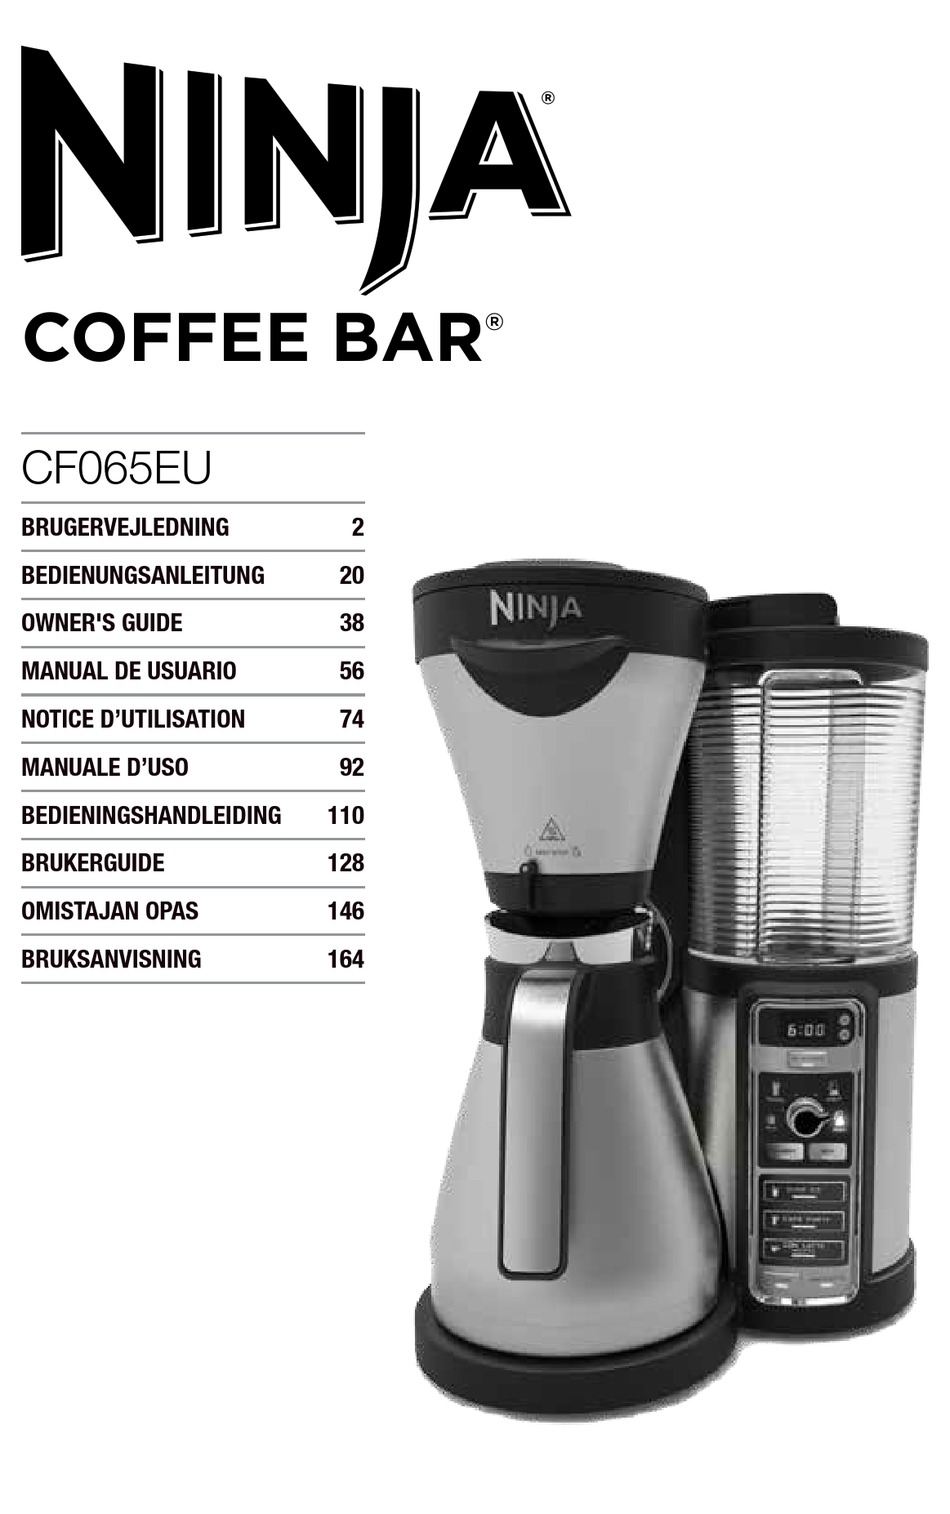 https://data2.manualslib.com/first-image/i59/294/29346/2934580/ninja-coffee-bar-cf065eu.jpg